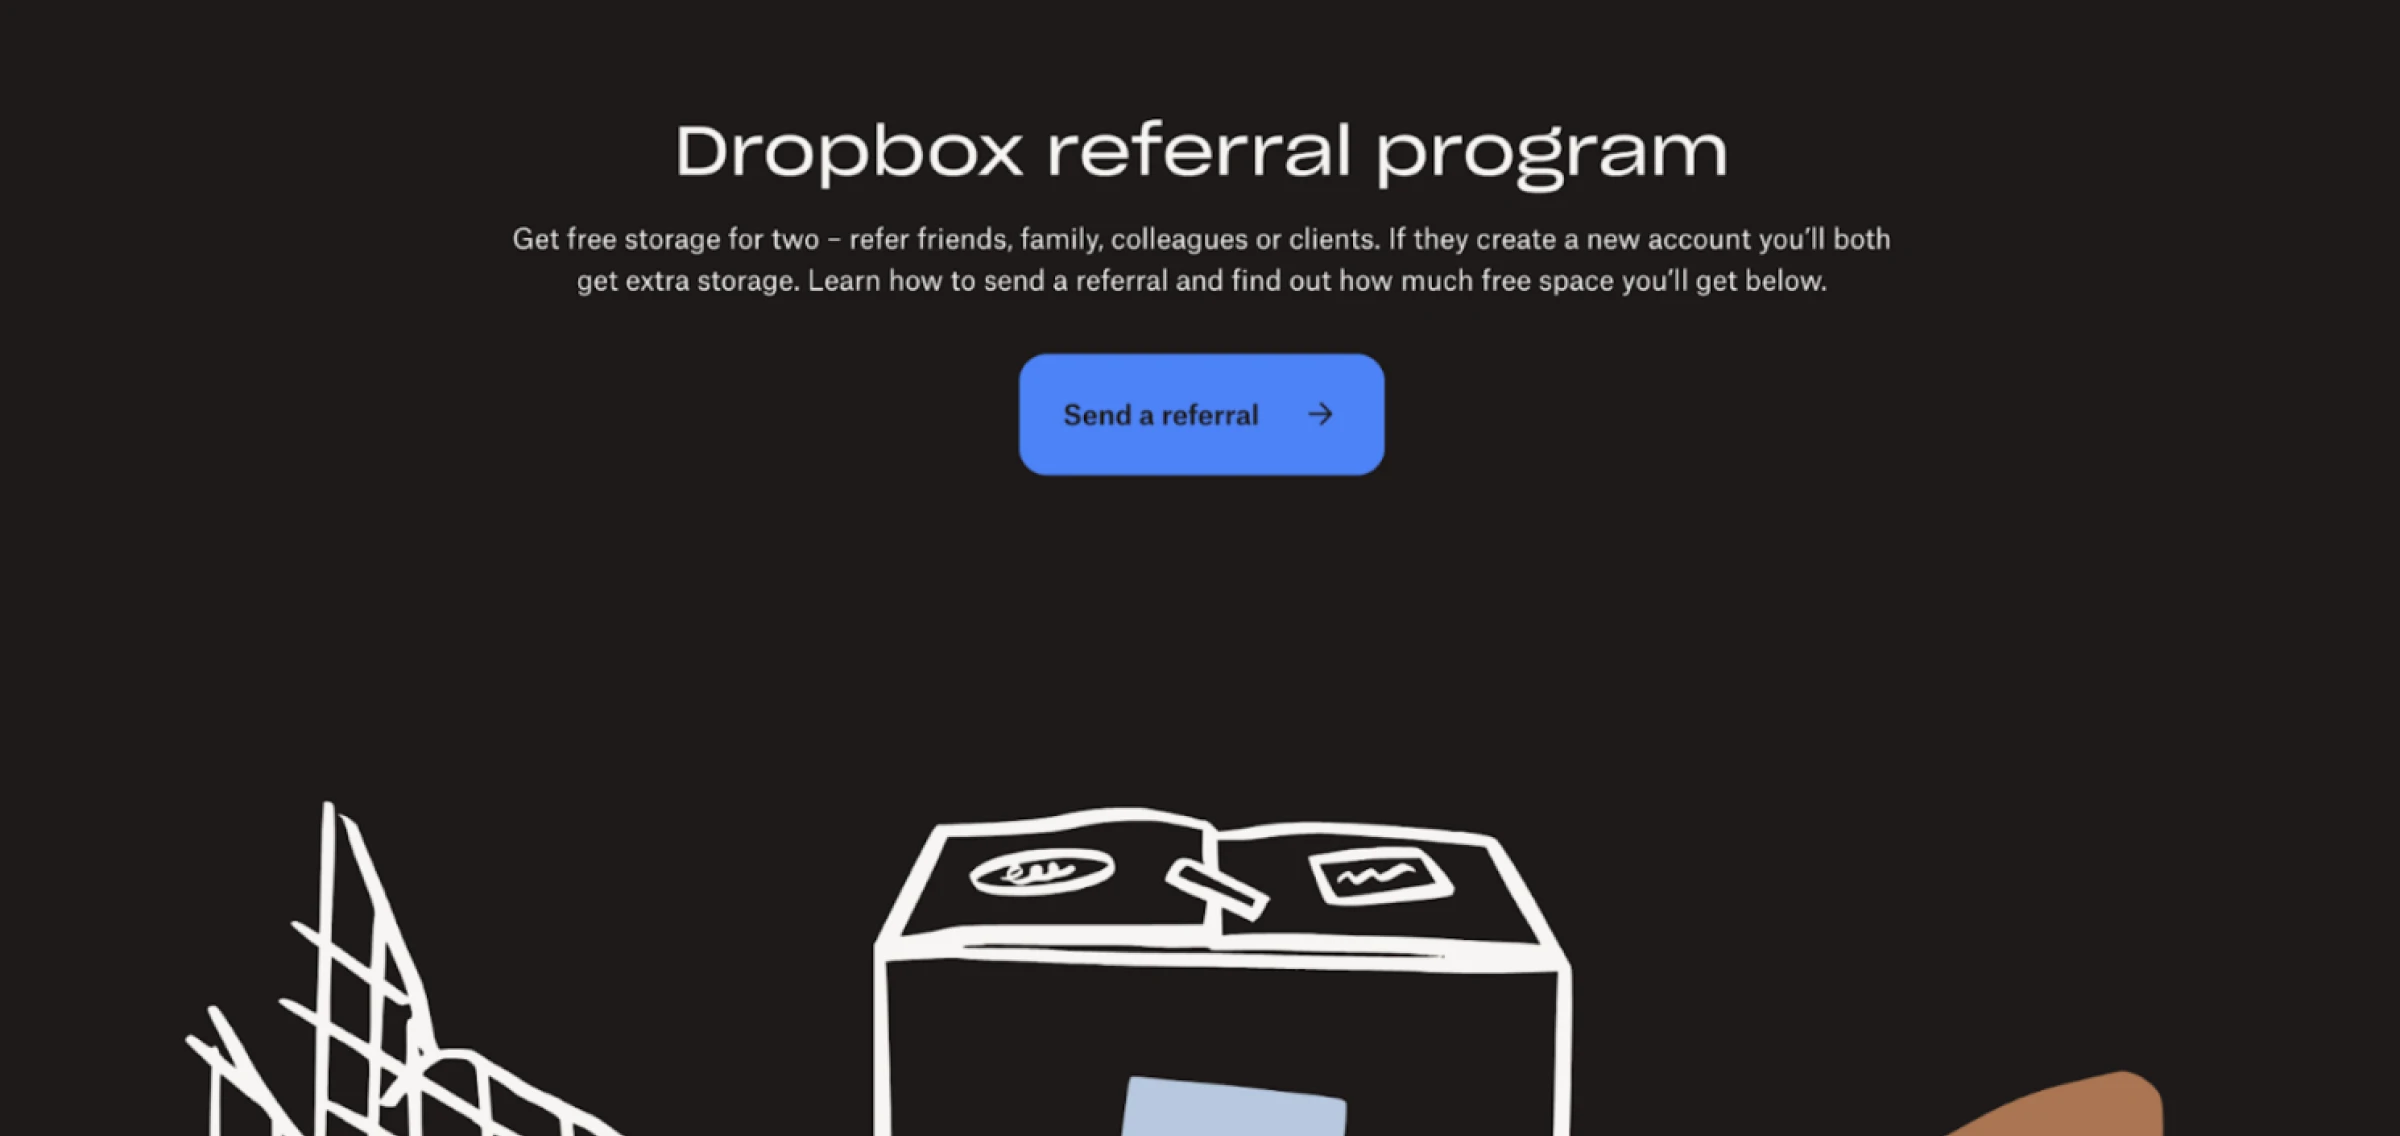 dropbox referral program example referral marketing best practices